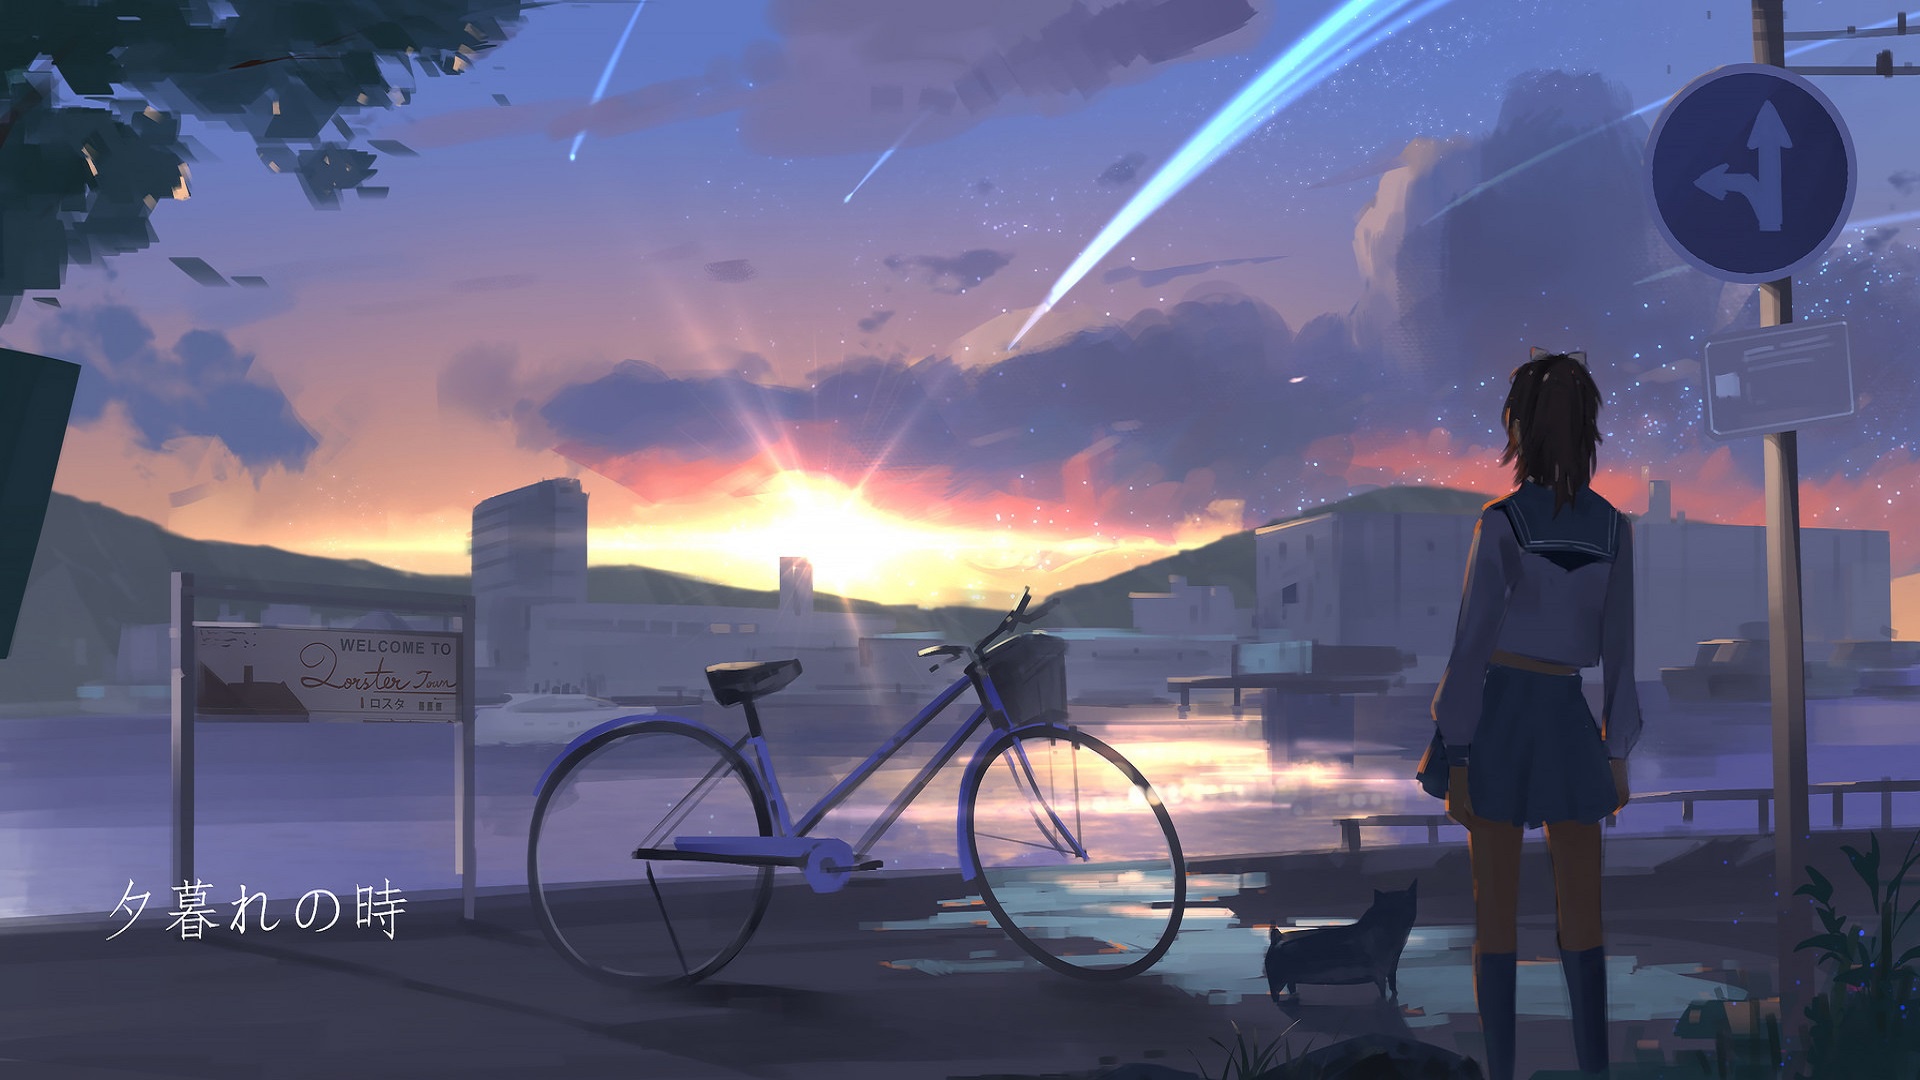 Anime 1920x1080 anime anime girls women outdoors urban sky standing vehicle bicycle city Sun sign school uniform ArtStation